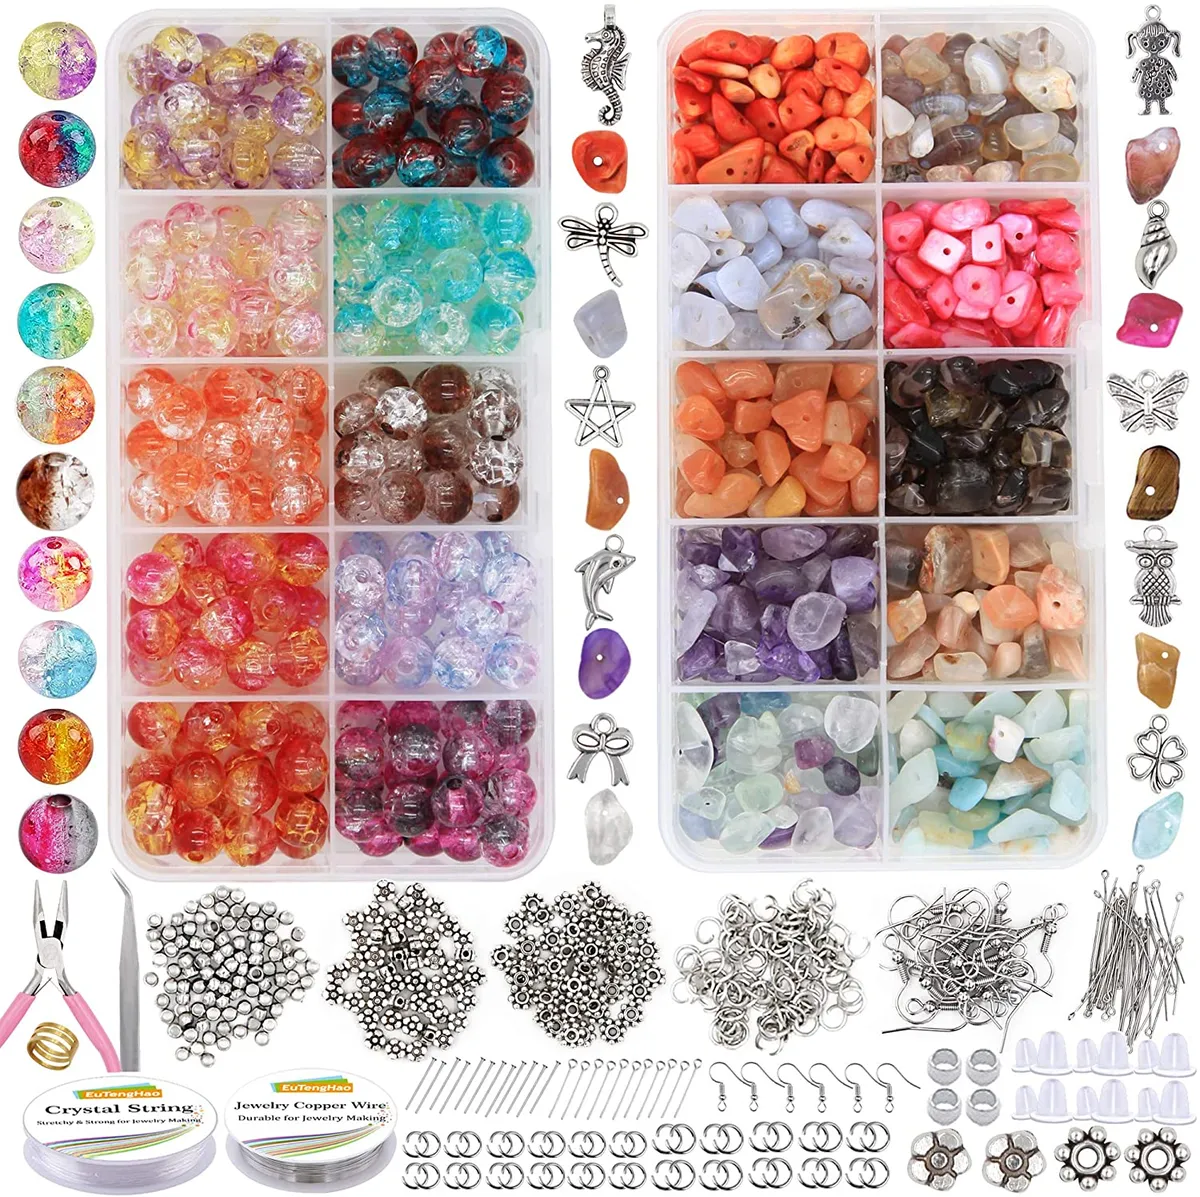 28 Color 9 mm Pony Beads for Bracelet Making Kit, Matte Frosted